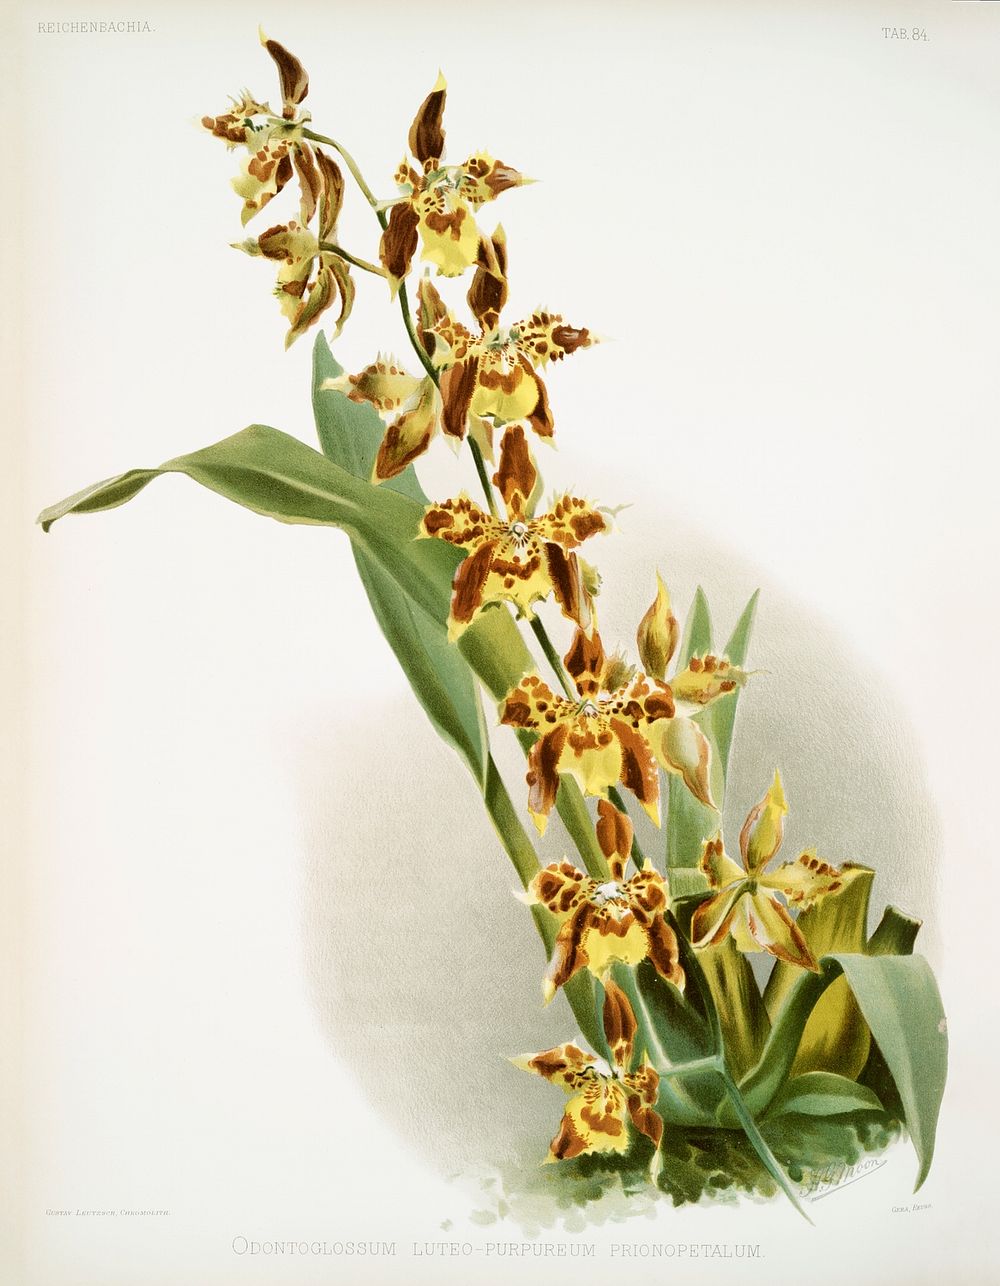 Odontoglossum luteo-purpureum prionopetalum from Reichenbachia Orchids (1888-1894) illustrated by Frederick Sander (1847…